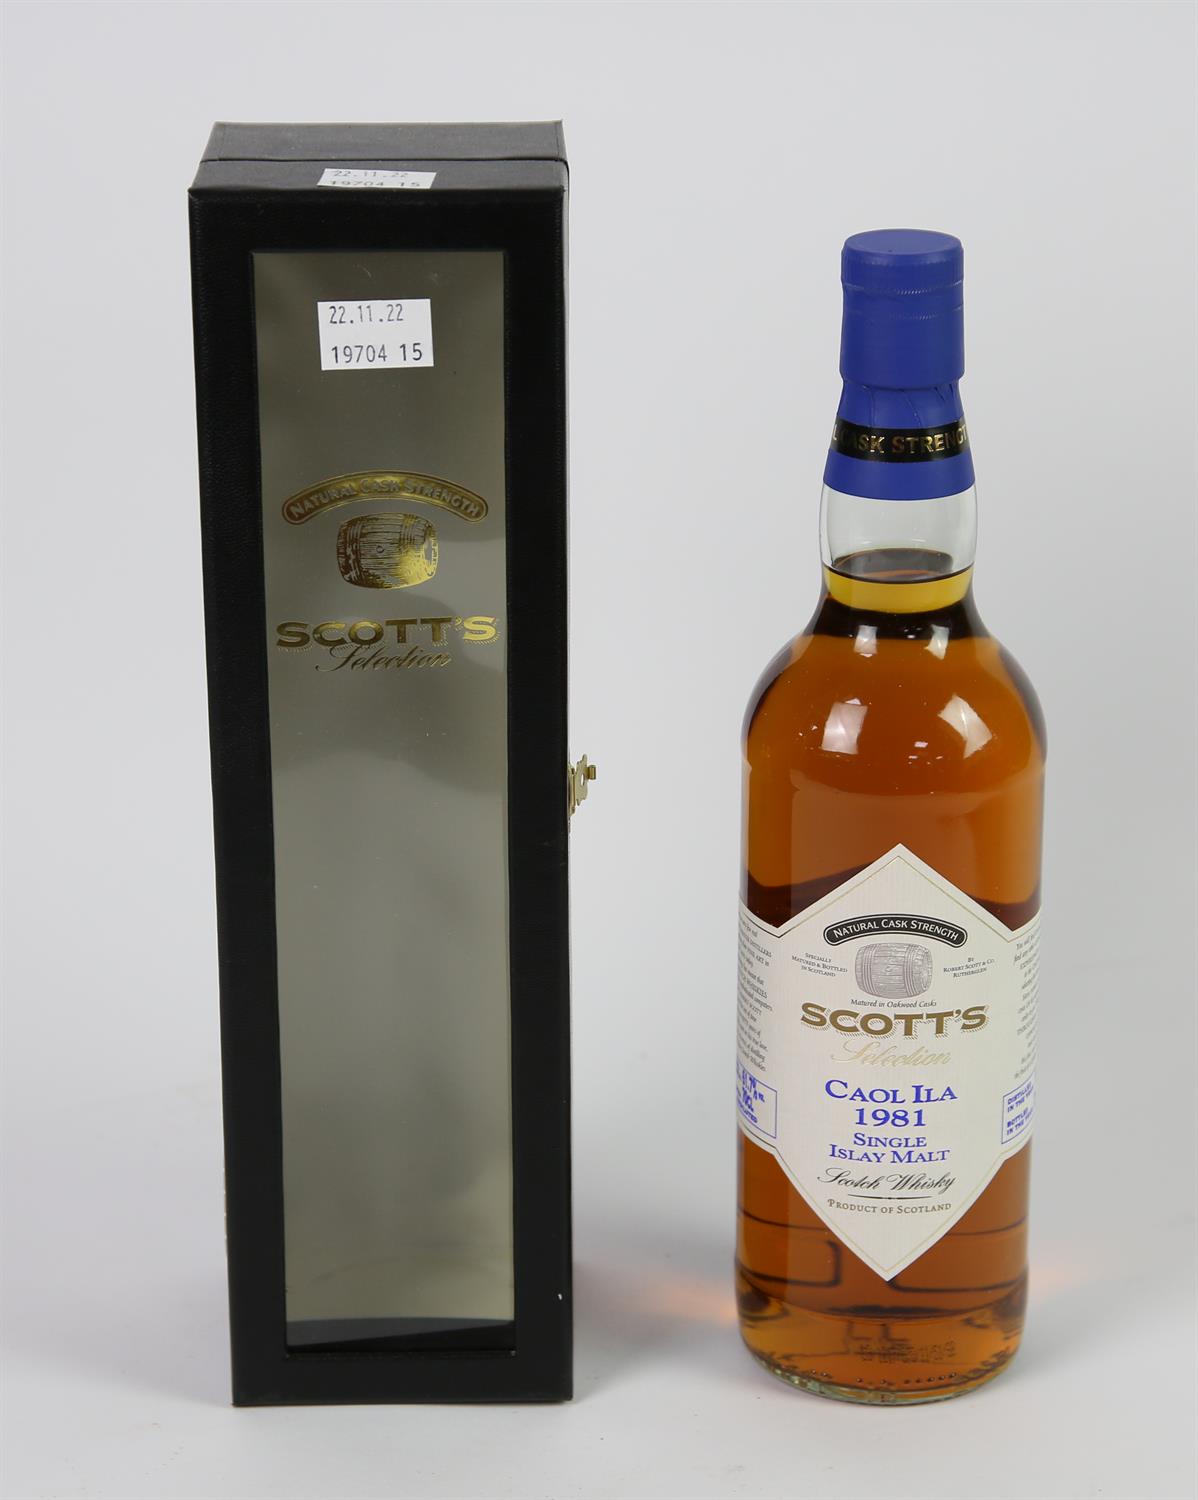 Scott’s selection, Caol Ila 1981 whisky, single bottle in original carton